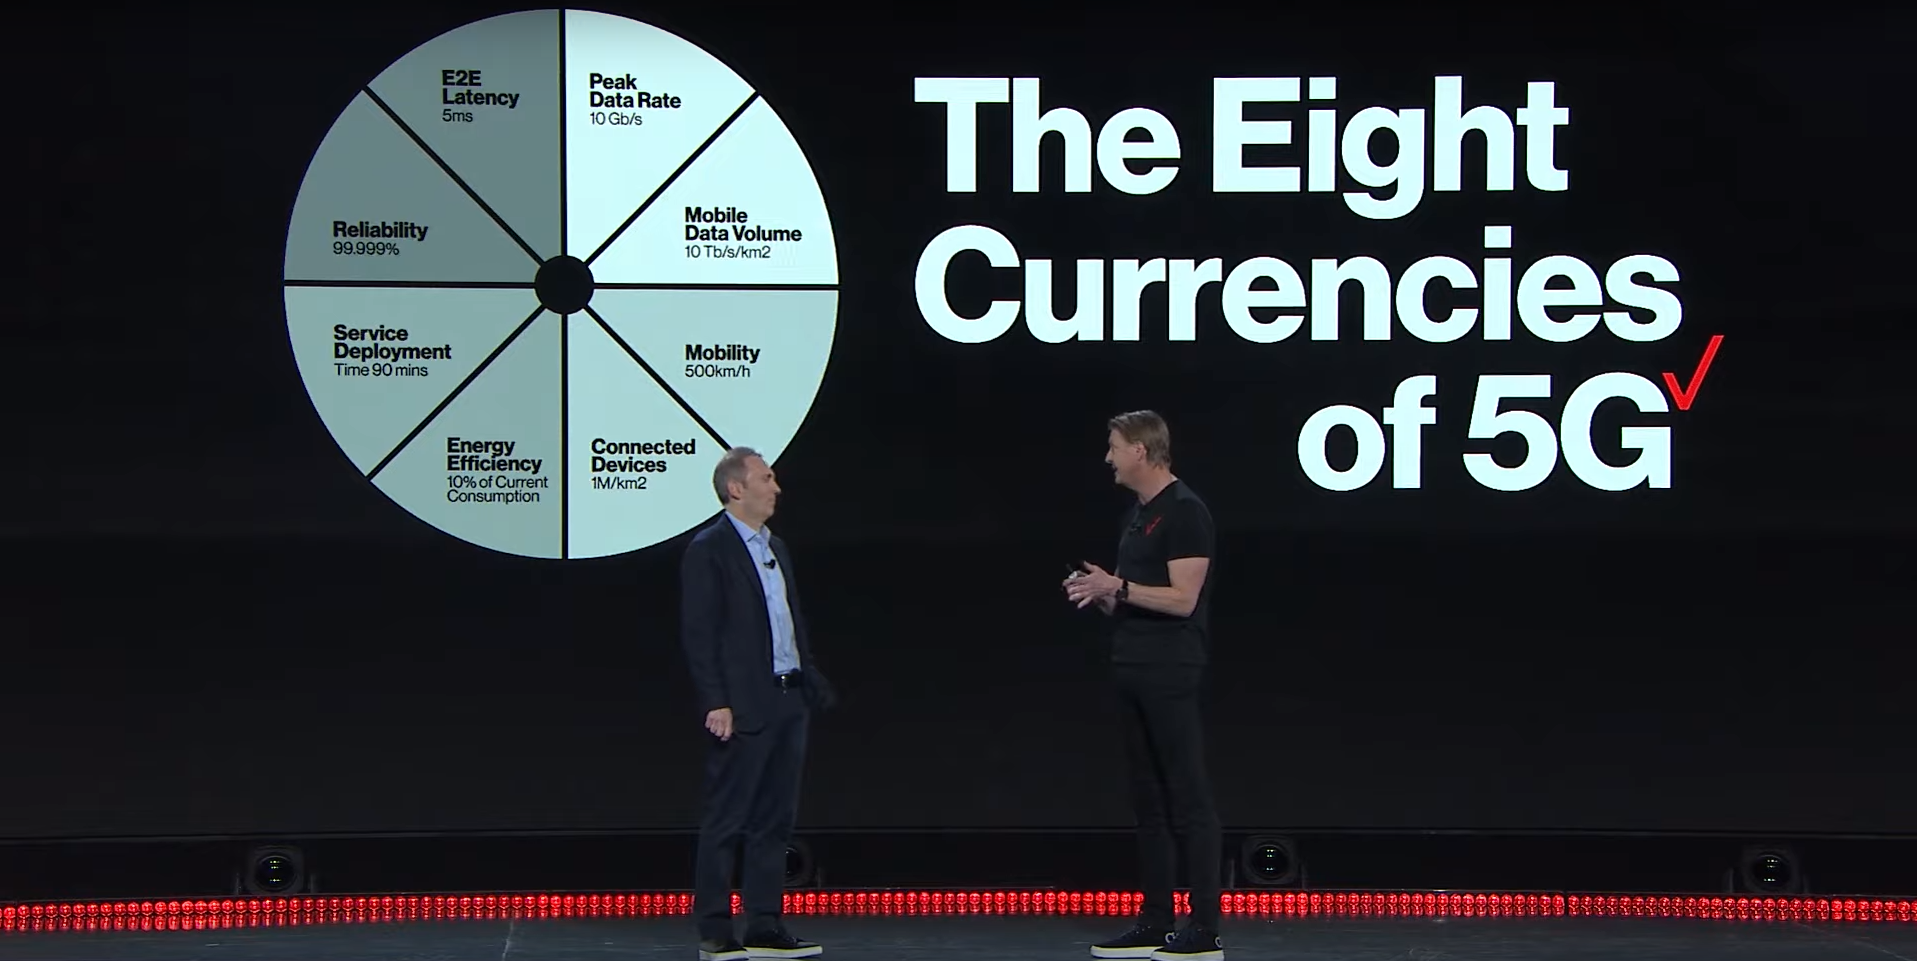 Verizon CEO Hans Vestberg explaining the eight currencies of 5g